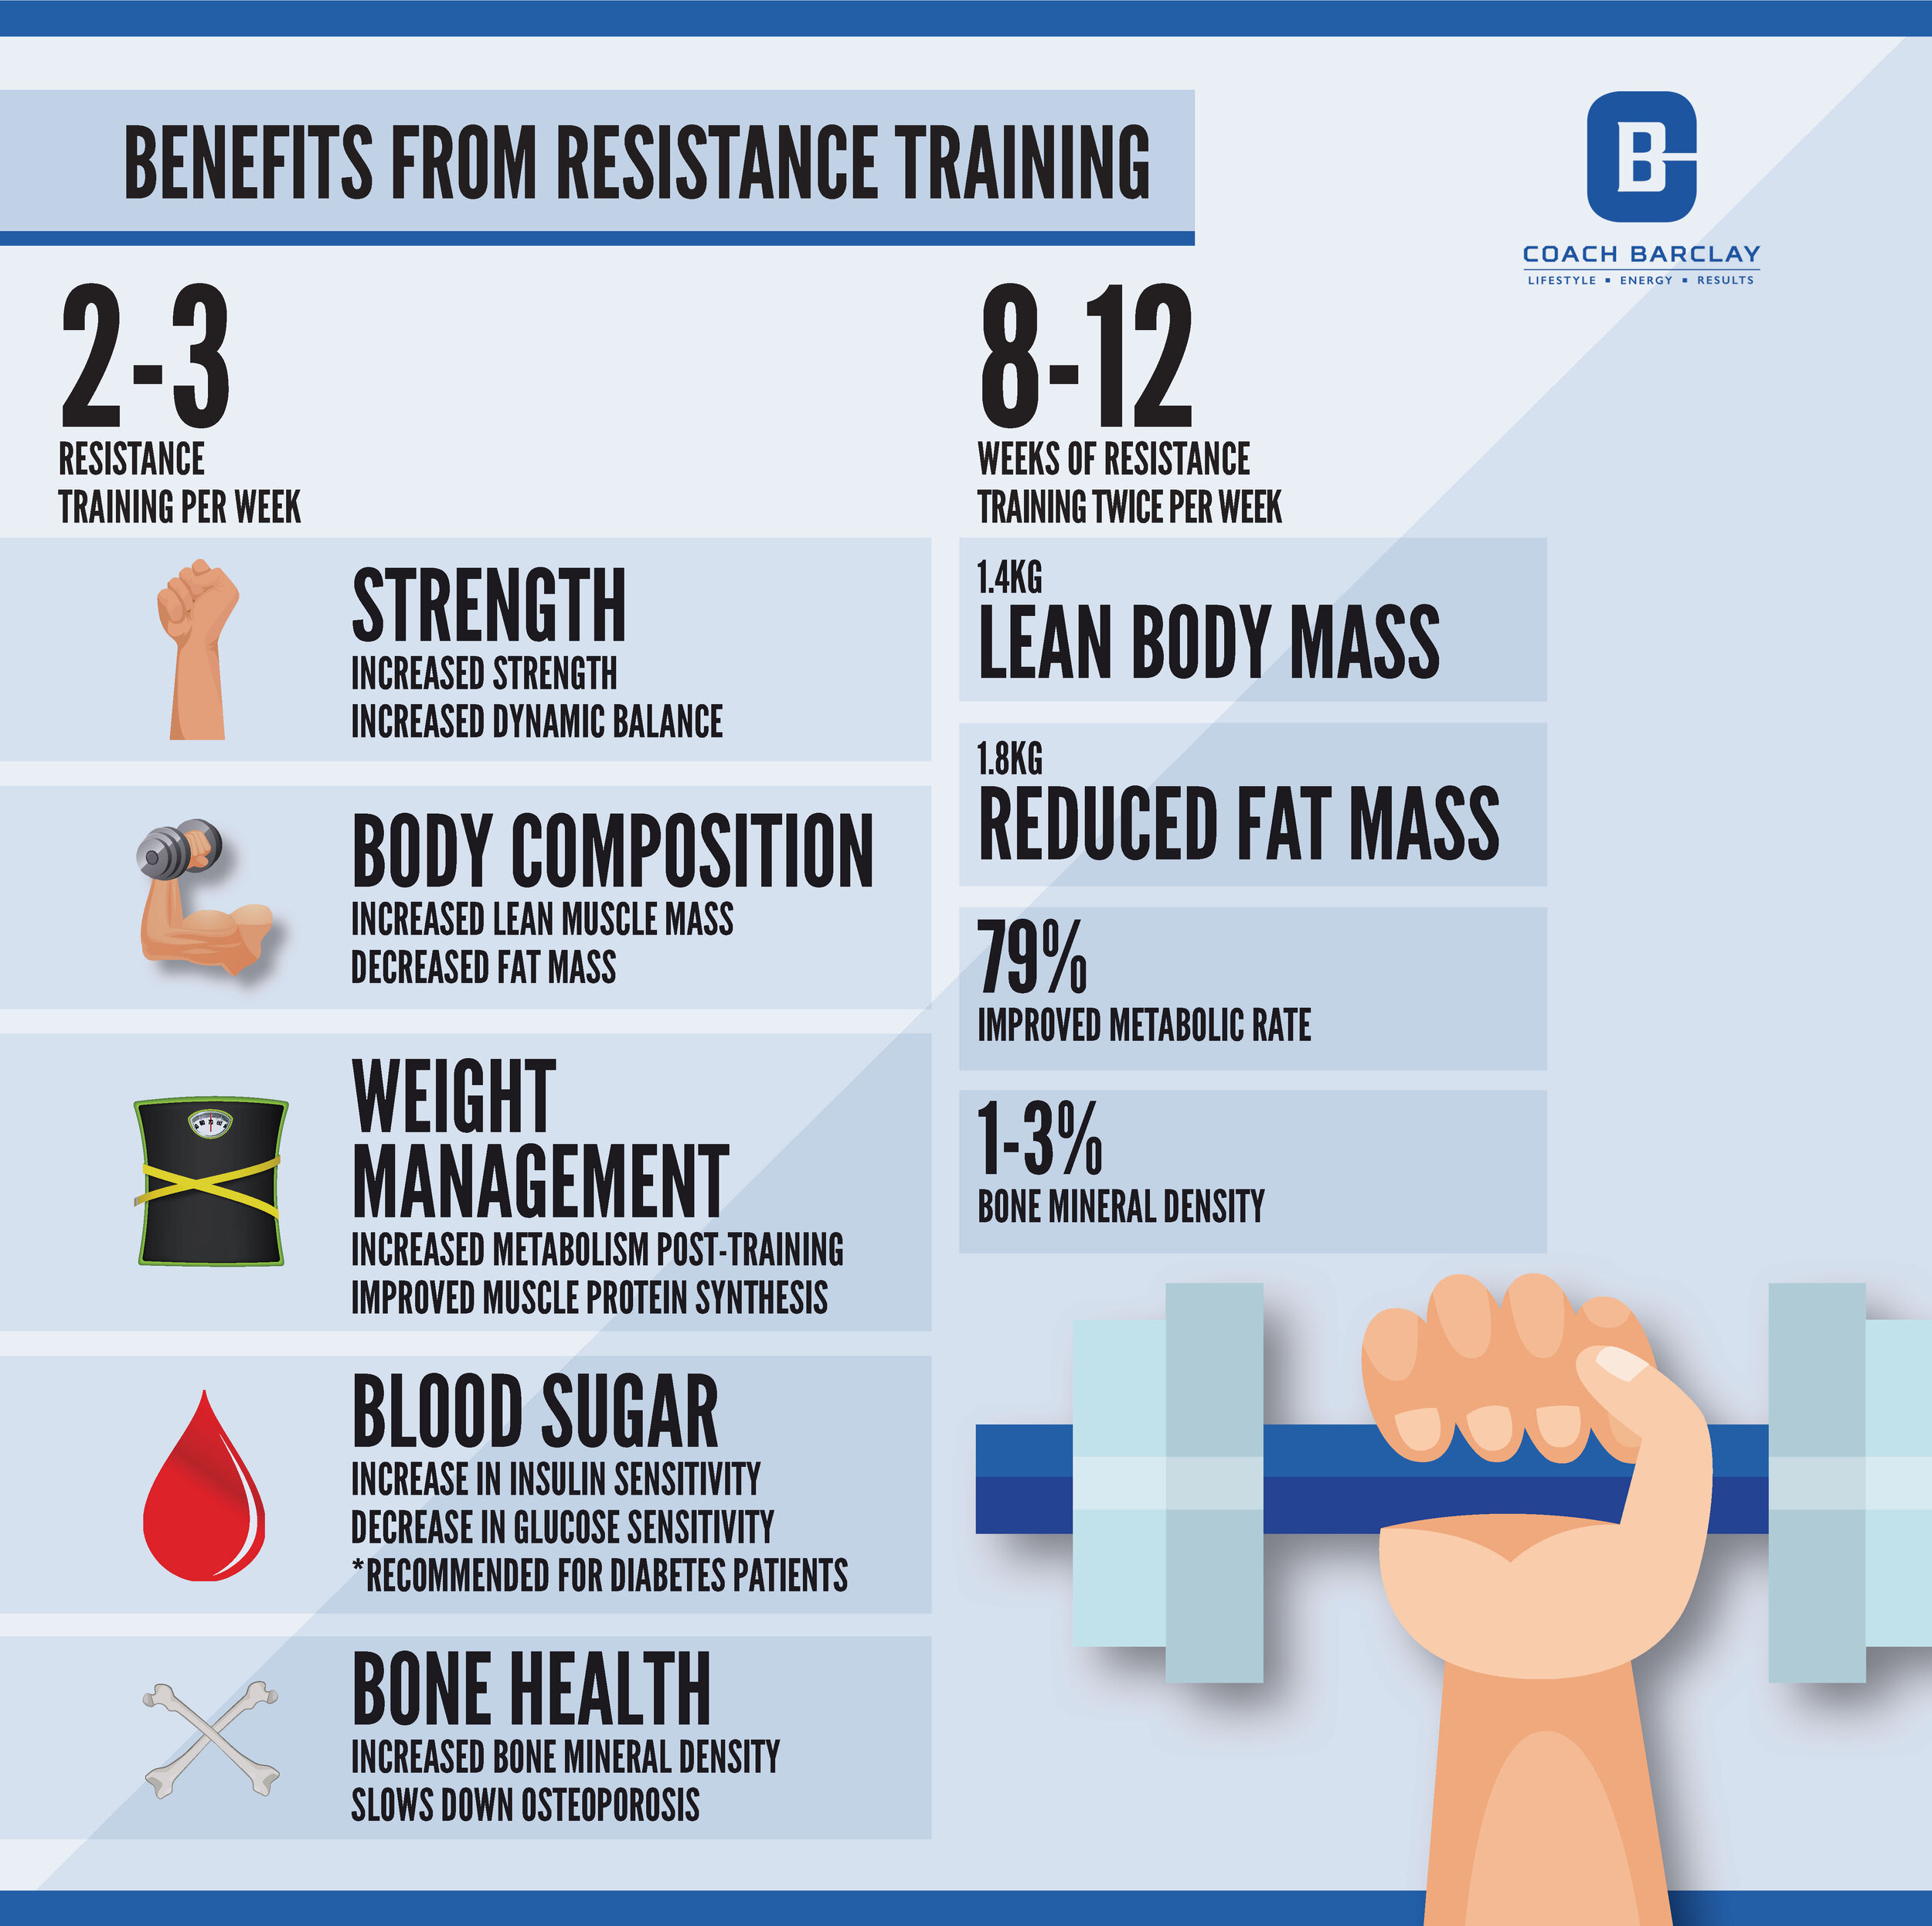 II. The Benefits of Strength Training